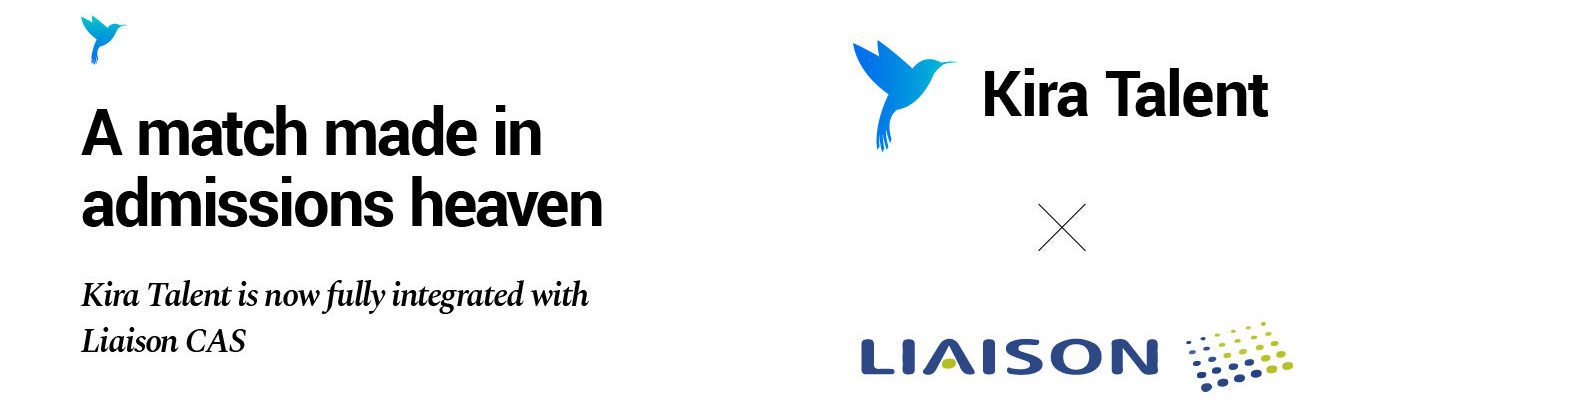 Kira Talent liaison CAS integration with logos